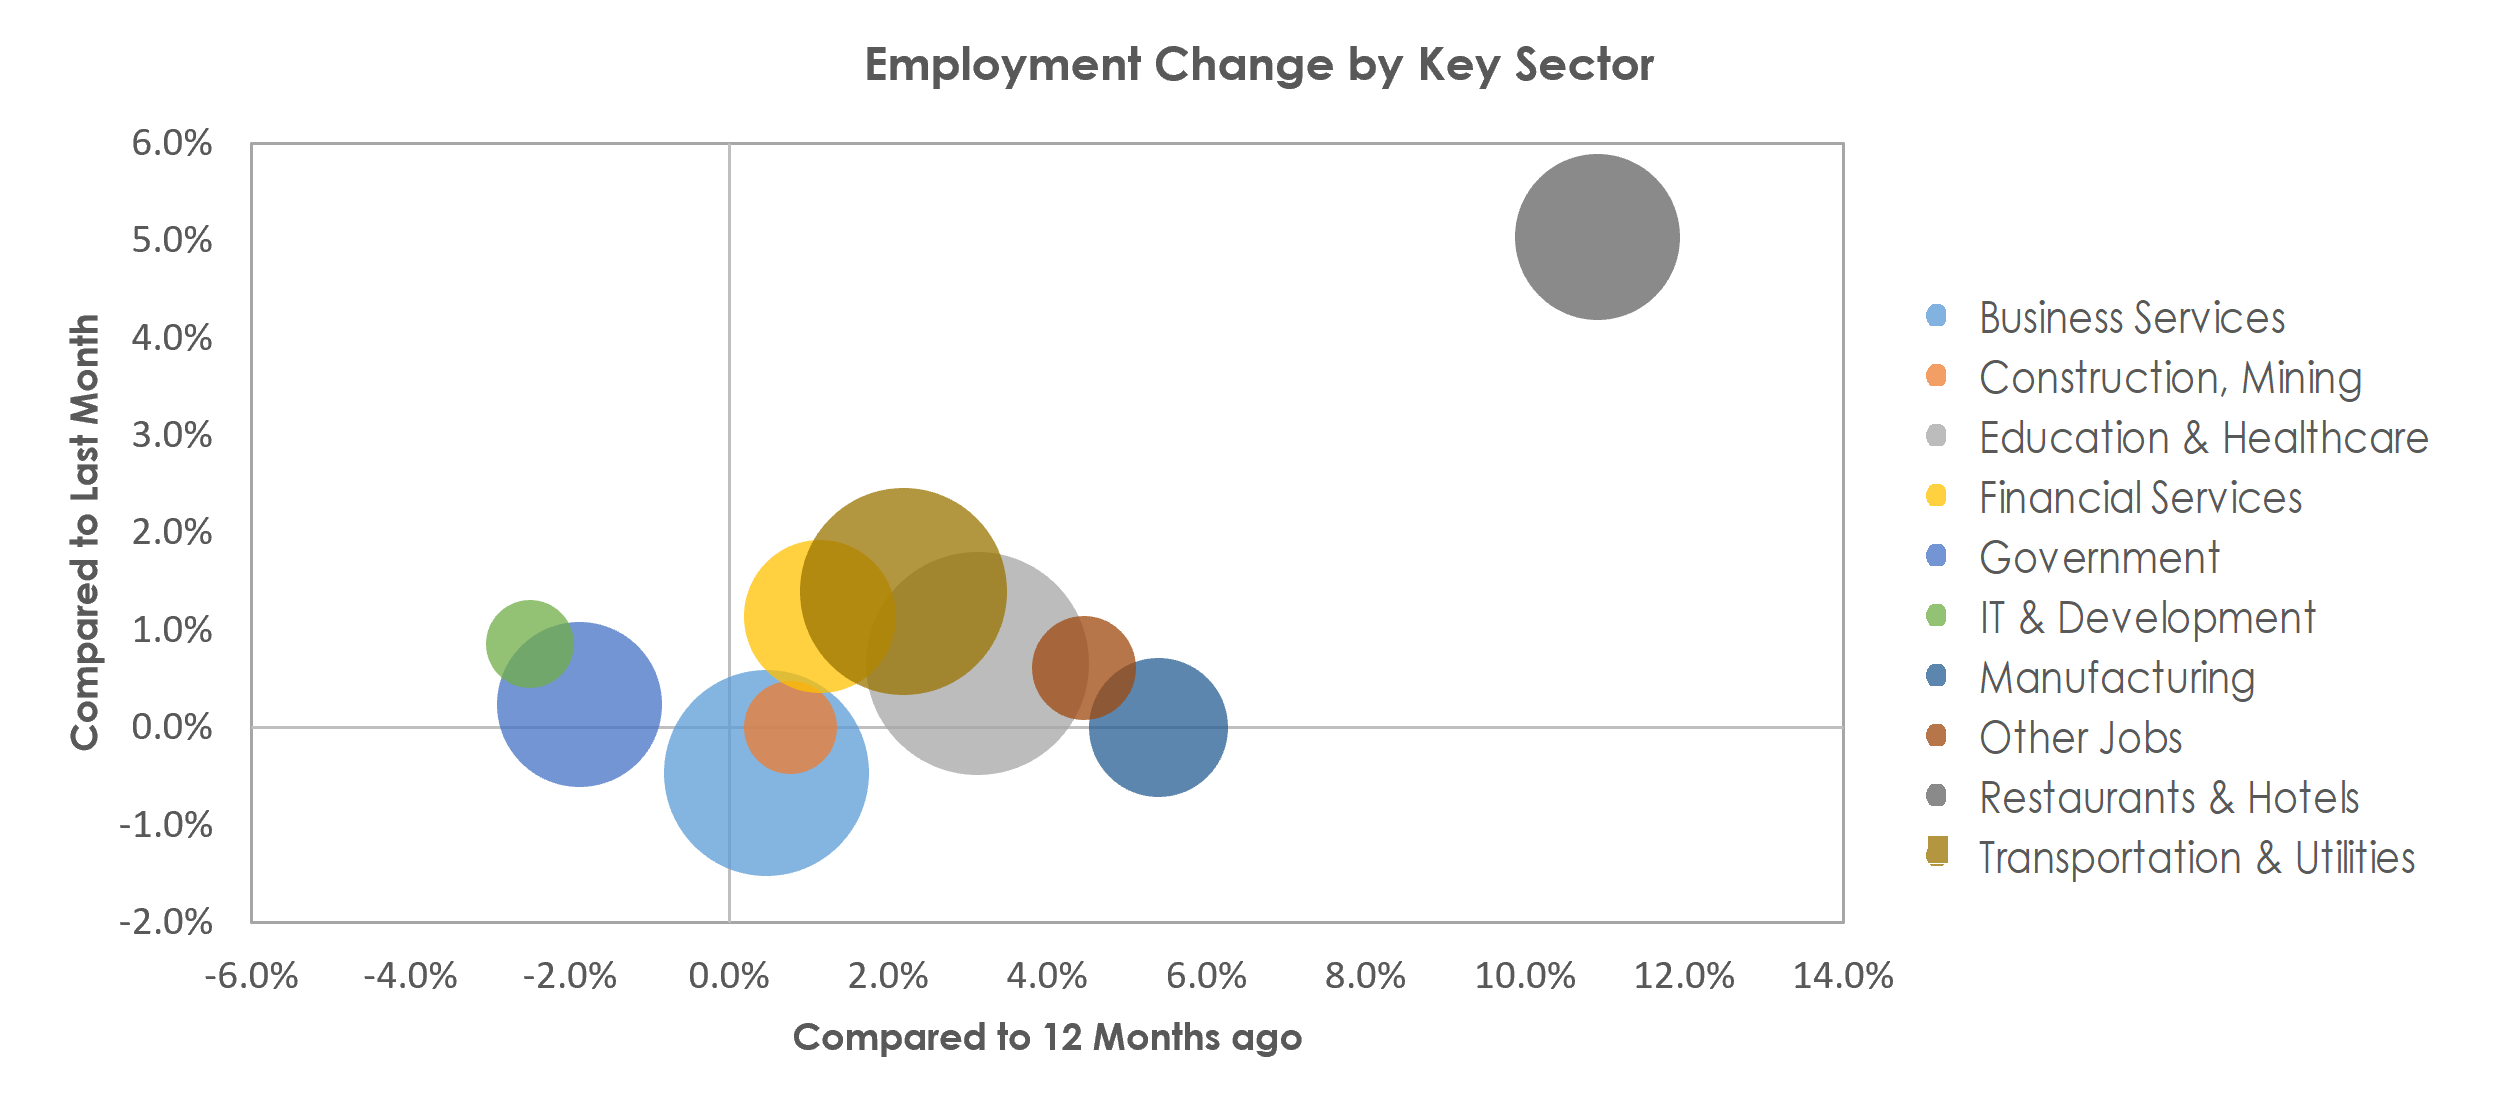 Bridgeport-Stamford-Norwalk, CT Unemployment by Industry May 2022